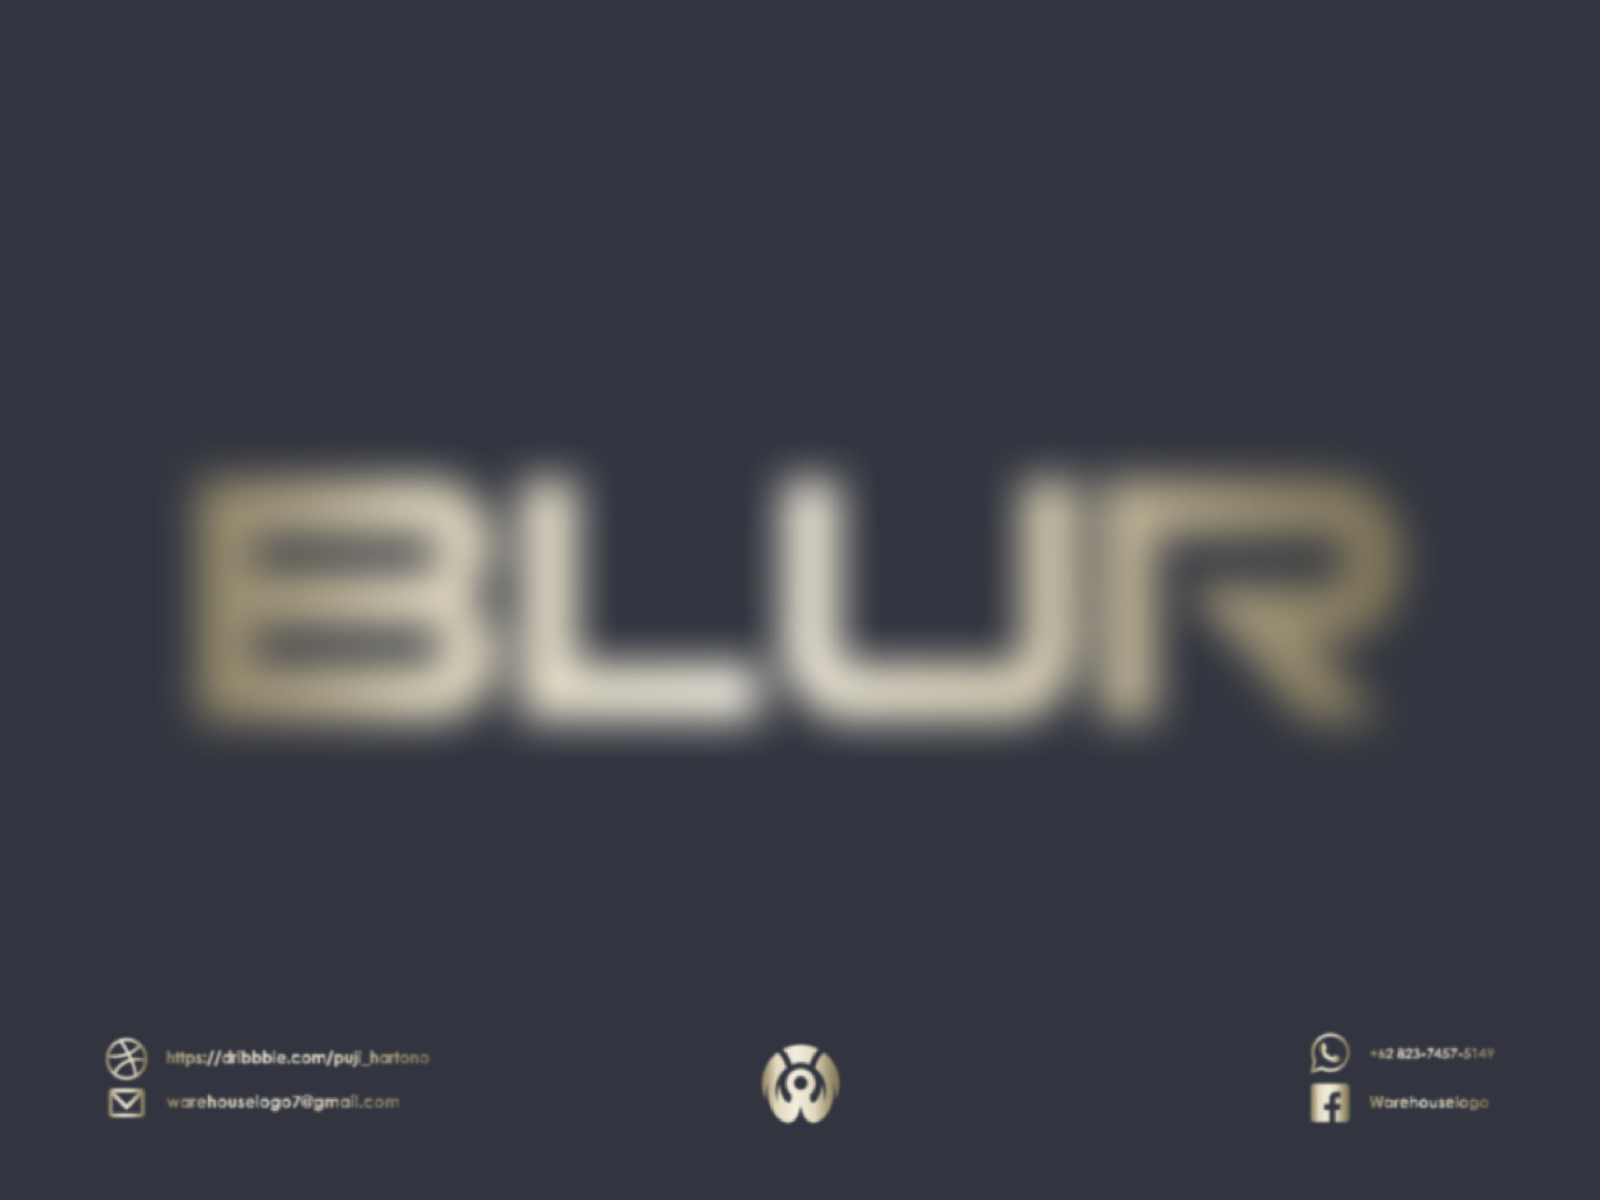 Blur - Blur added a new photo.